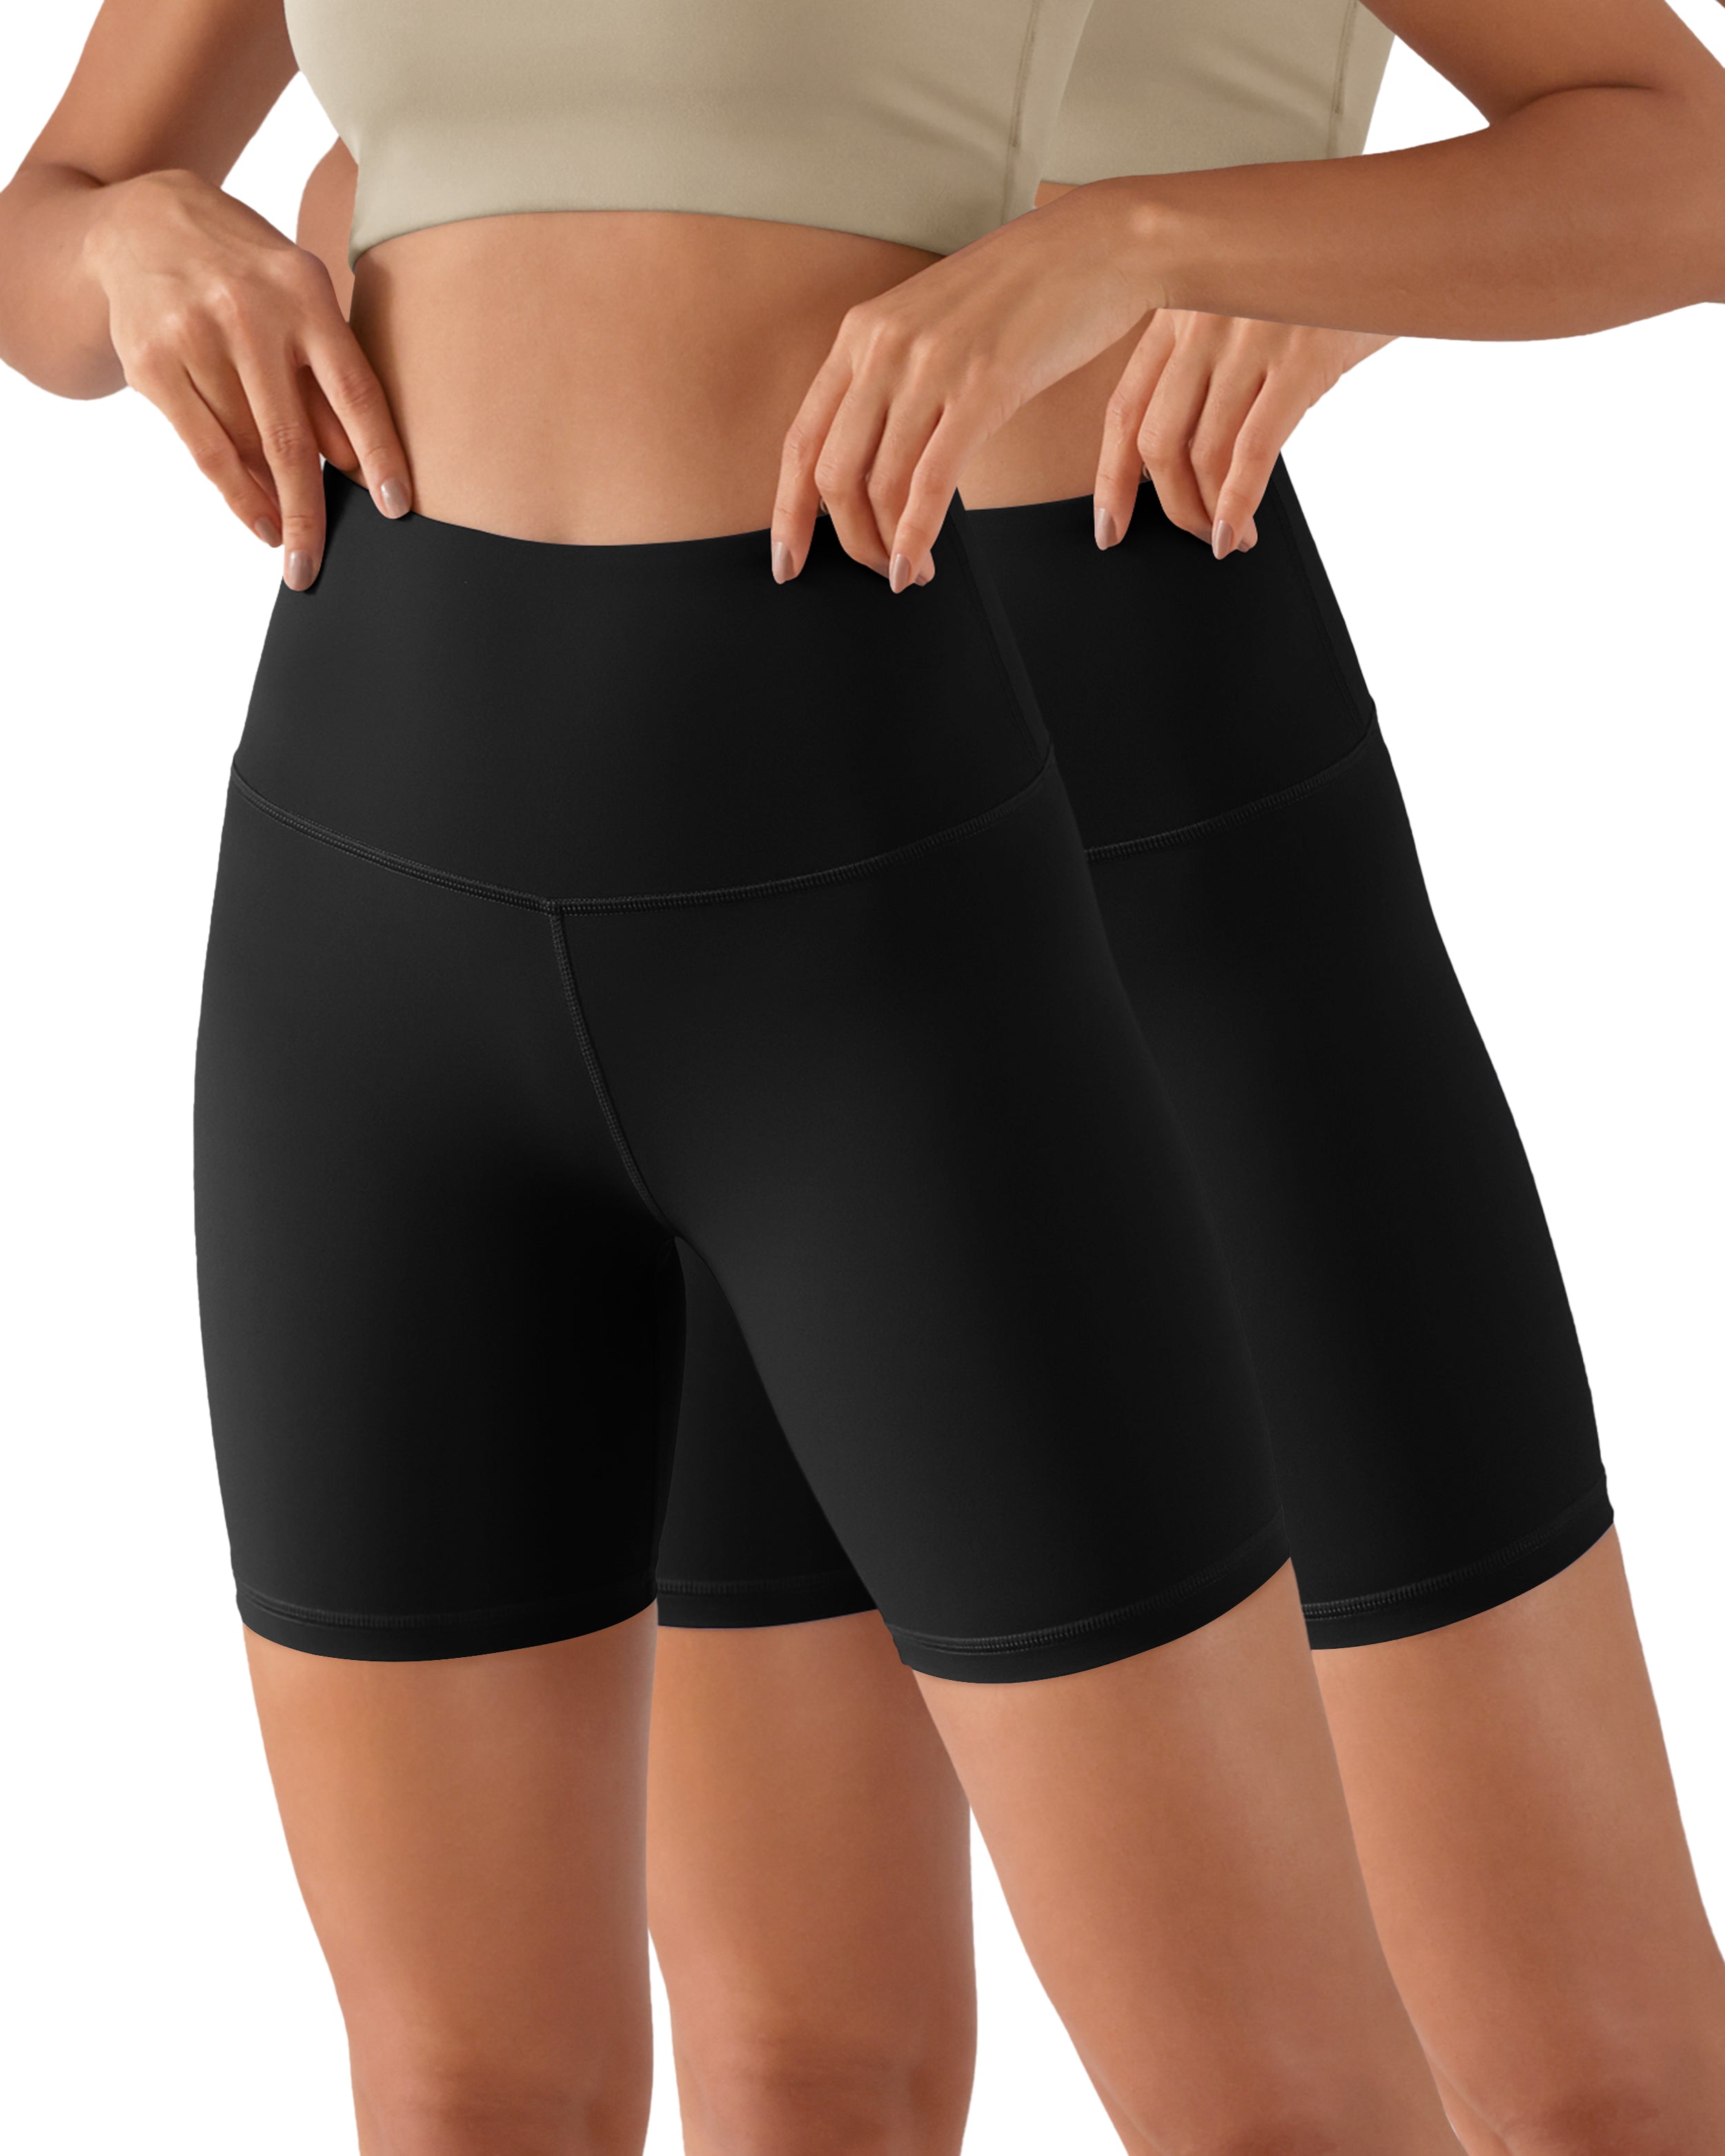 2-Pack 6" High Waist Workout Shorts Black+Black - ododos